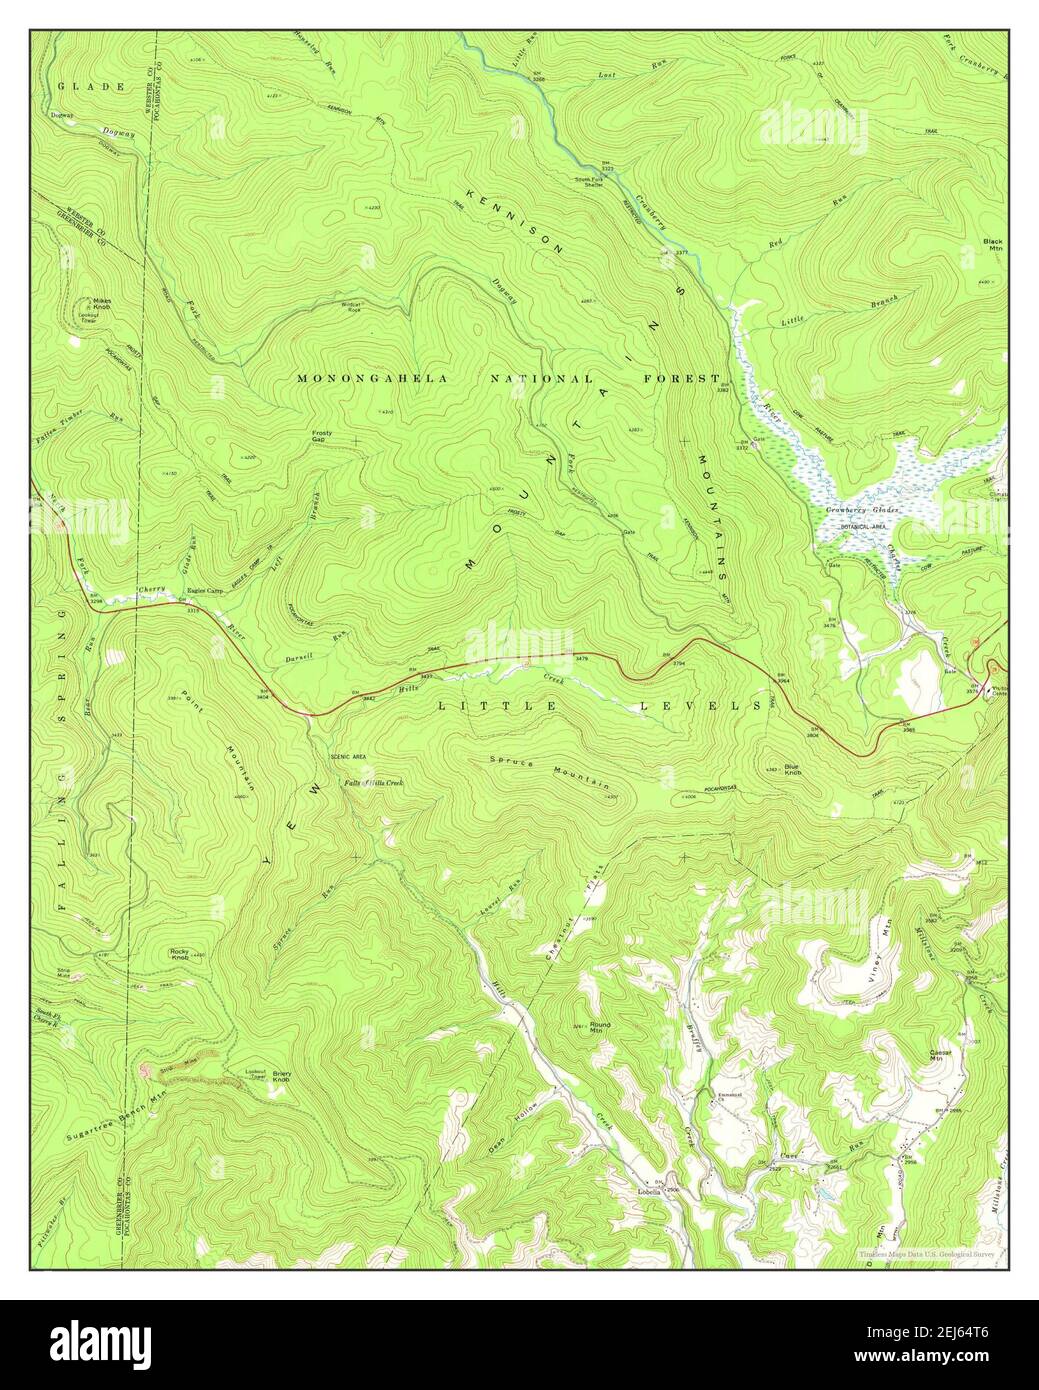 Lobelia, West Virginia, map 1973, 1:24000, United States of America by Timeless Maps, data U.S. Geological Survey Stock Photo